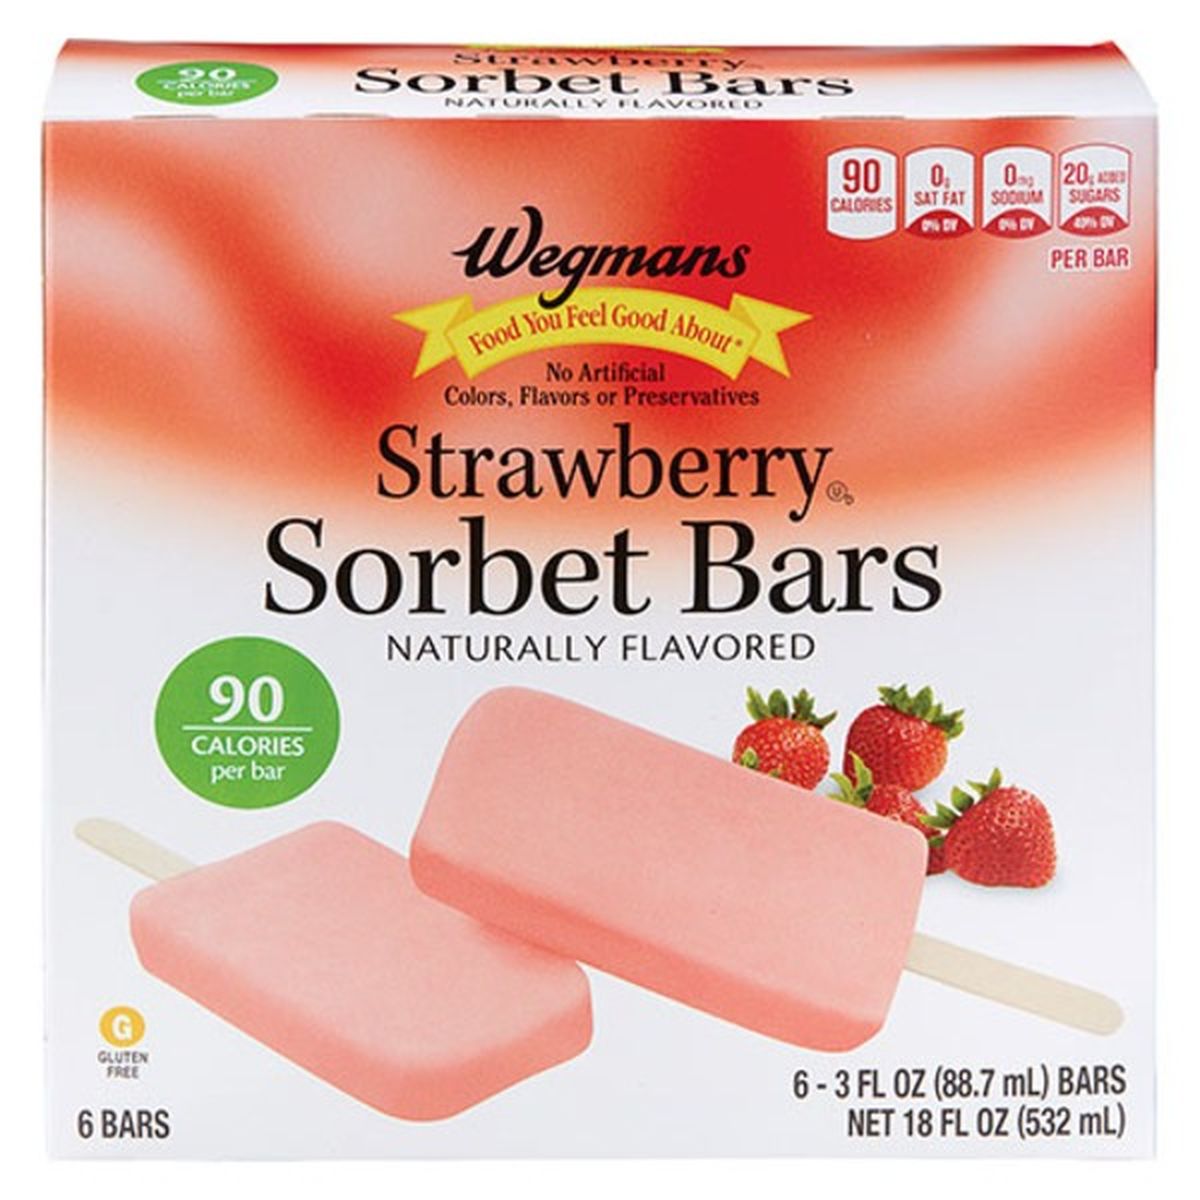 Calories in Wegmans Strawberry Sorbet Bars